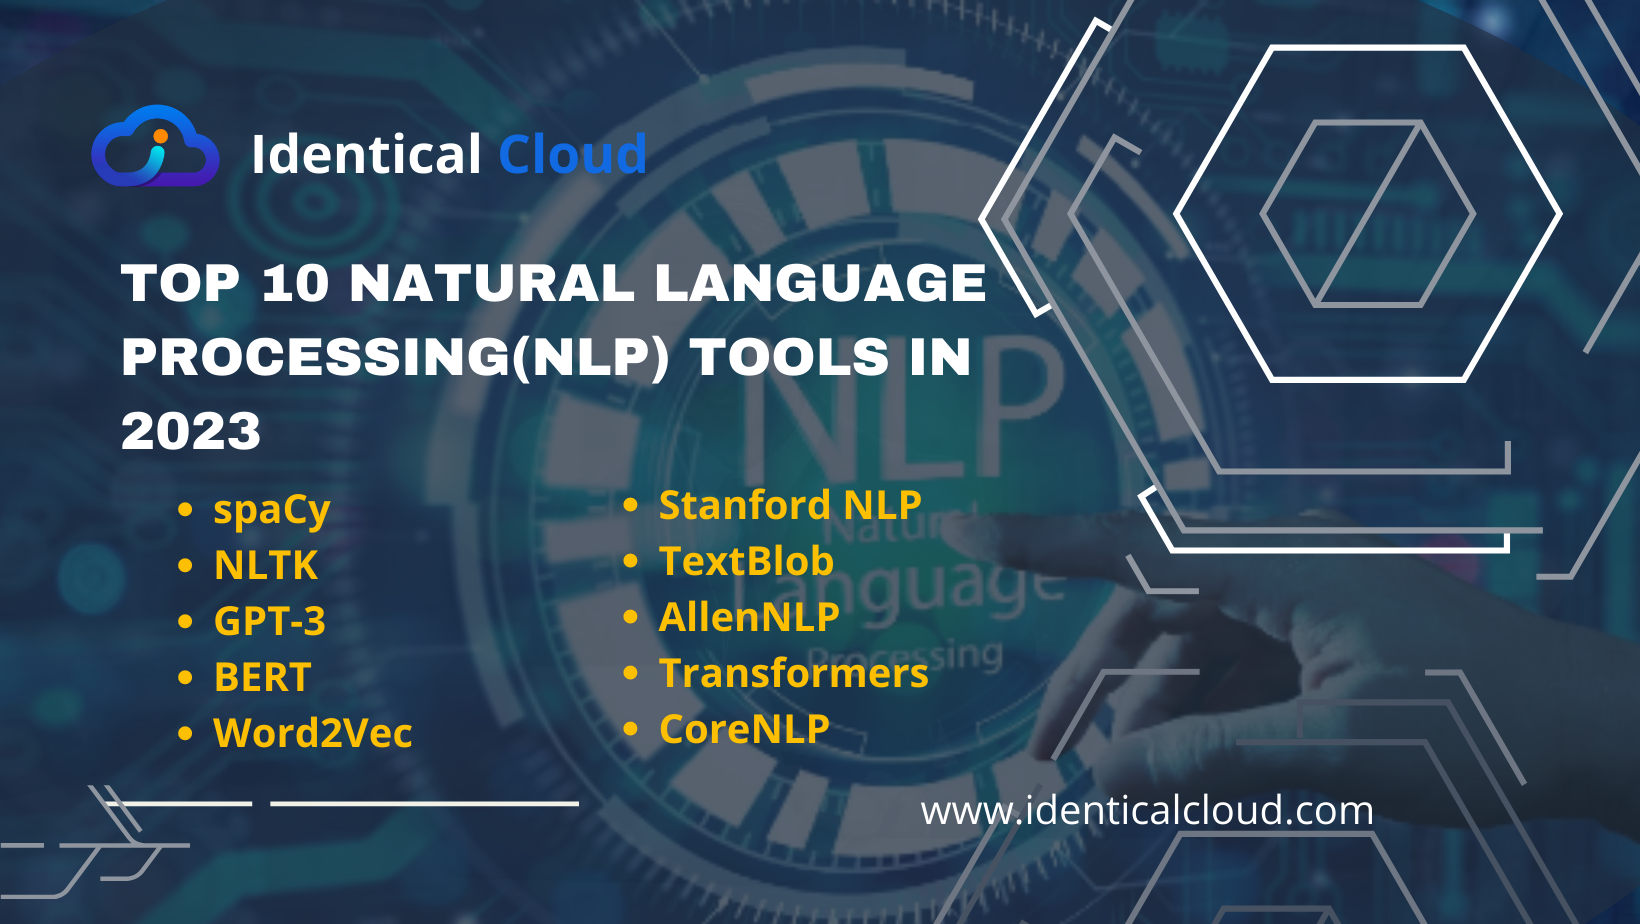 Top 10 Natural Language Processing(NLP) Tools in 2023 - identicalcloud.com